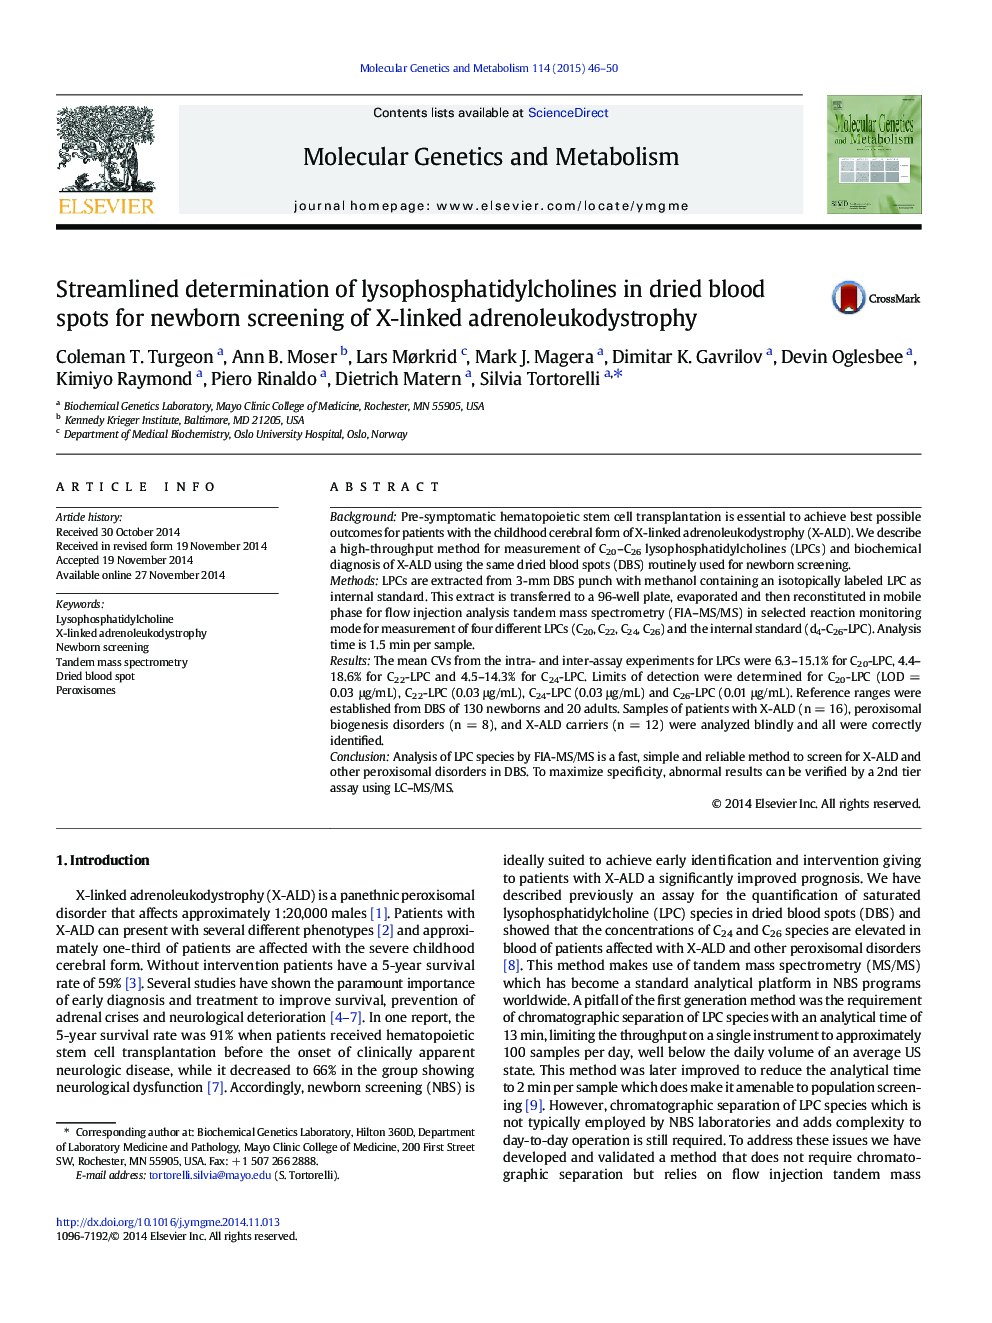 Streamlined determination of lysophosphatidylcholines in dried blood spots for newborn screening of X-linked adrenoleukodystrophy